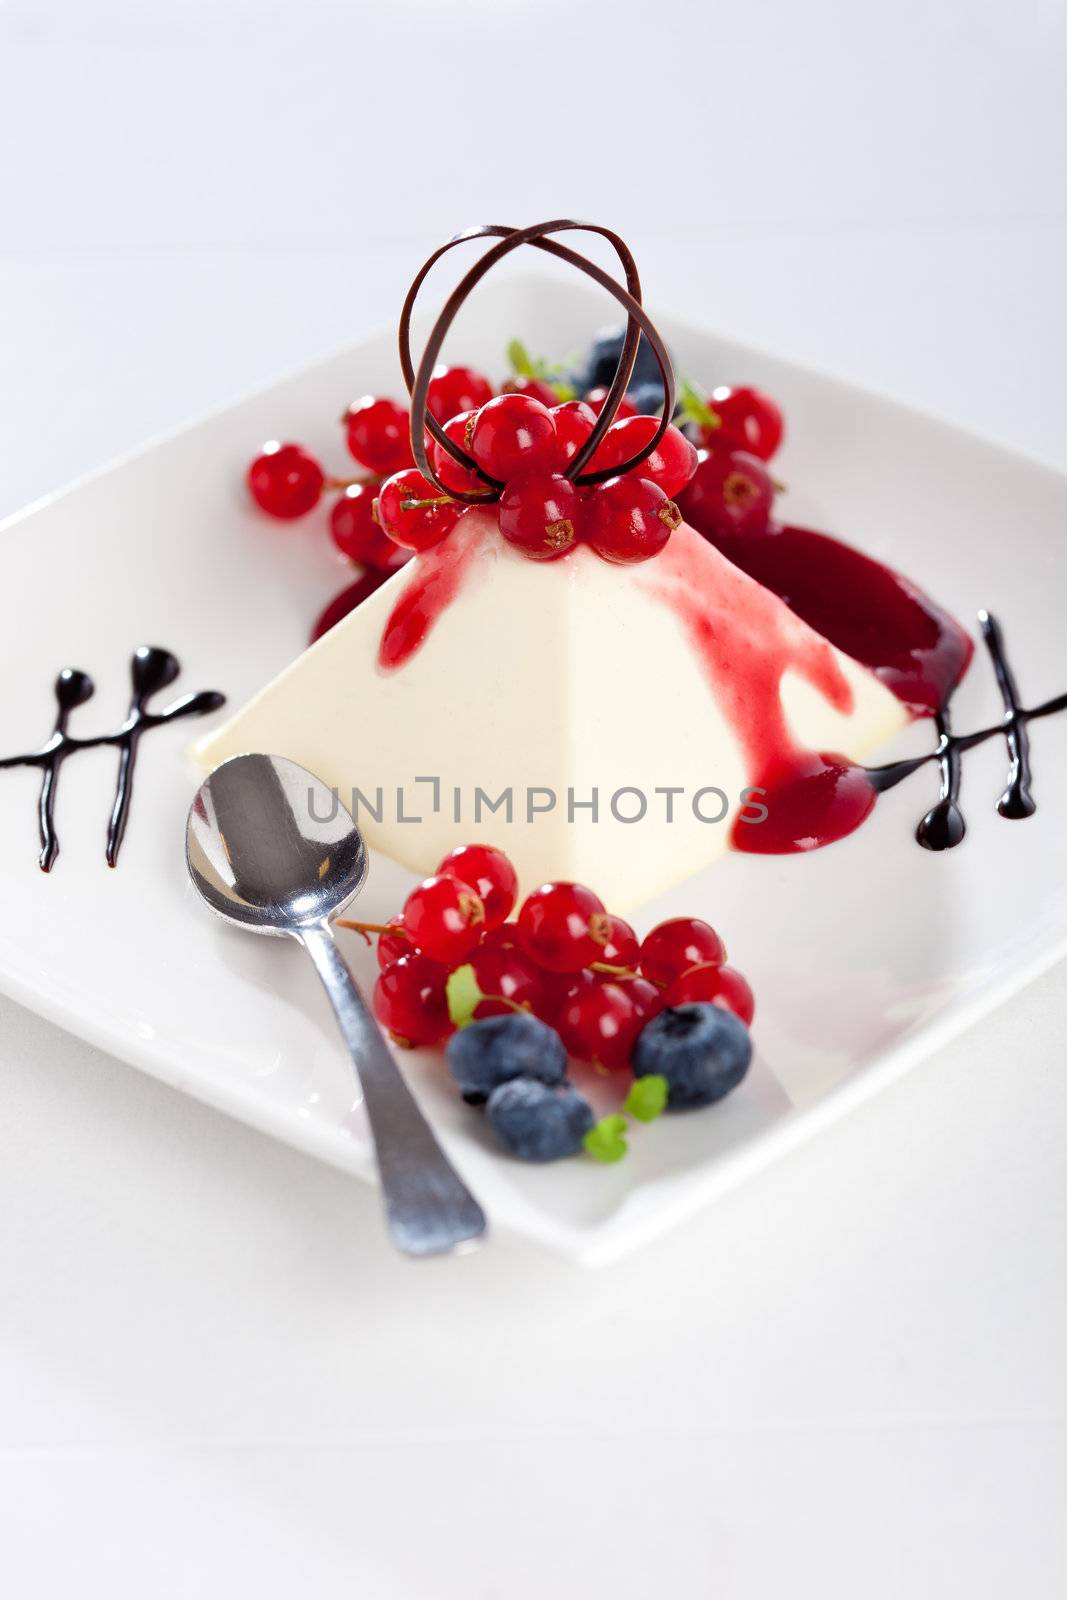 Fruity pannacotta by Fotosmurf